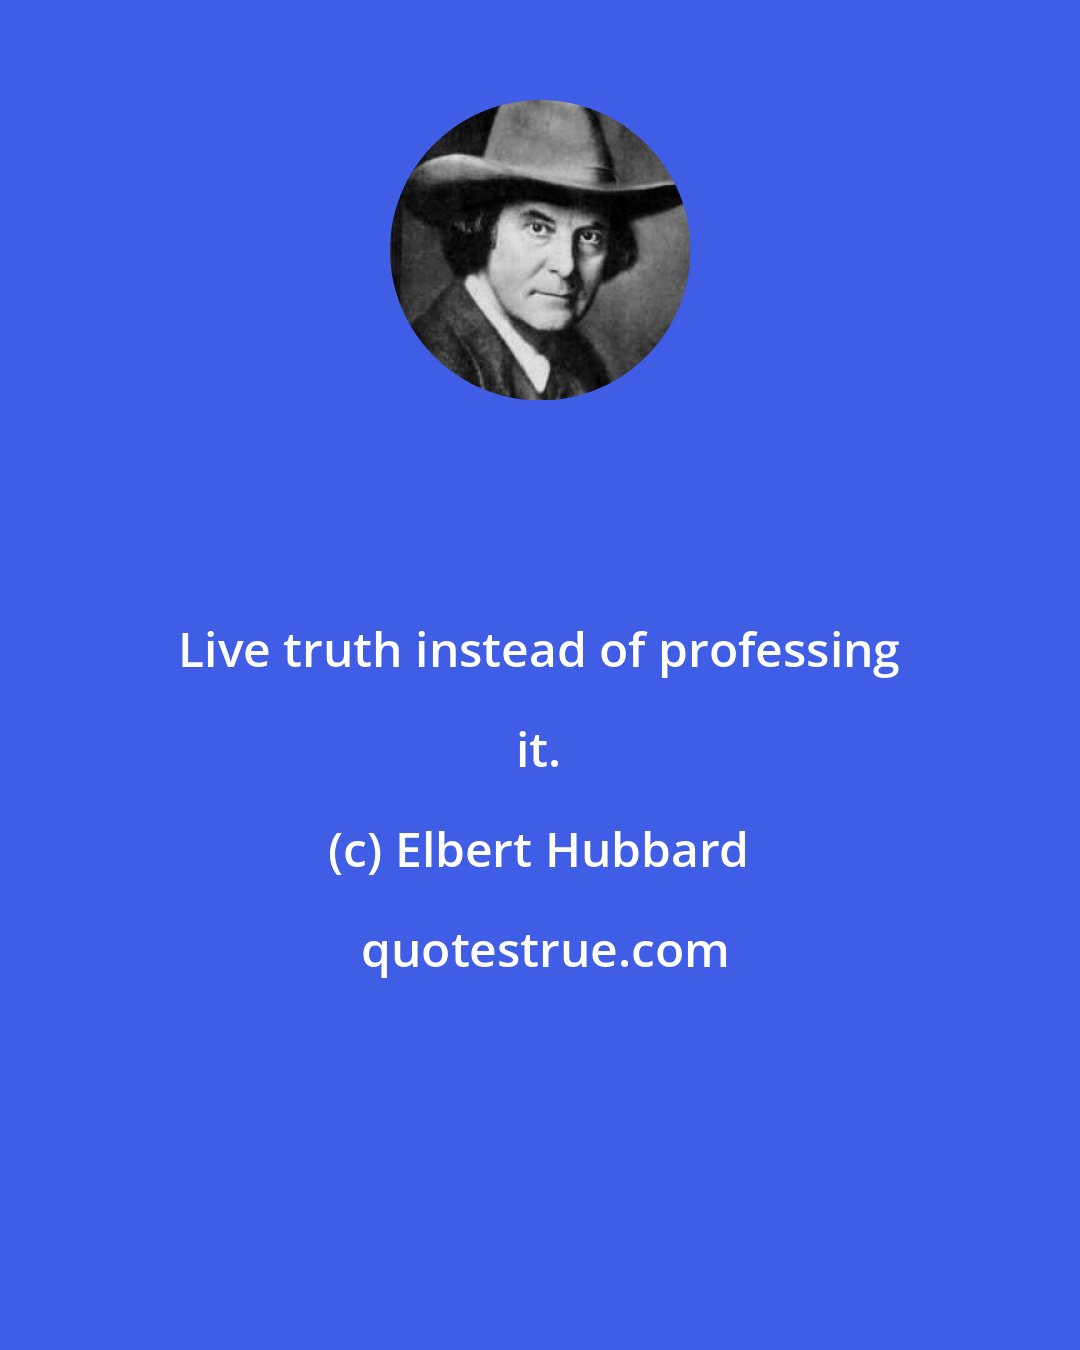 Elbert Hubbard: Live truth instead of professing it.